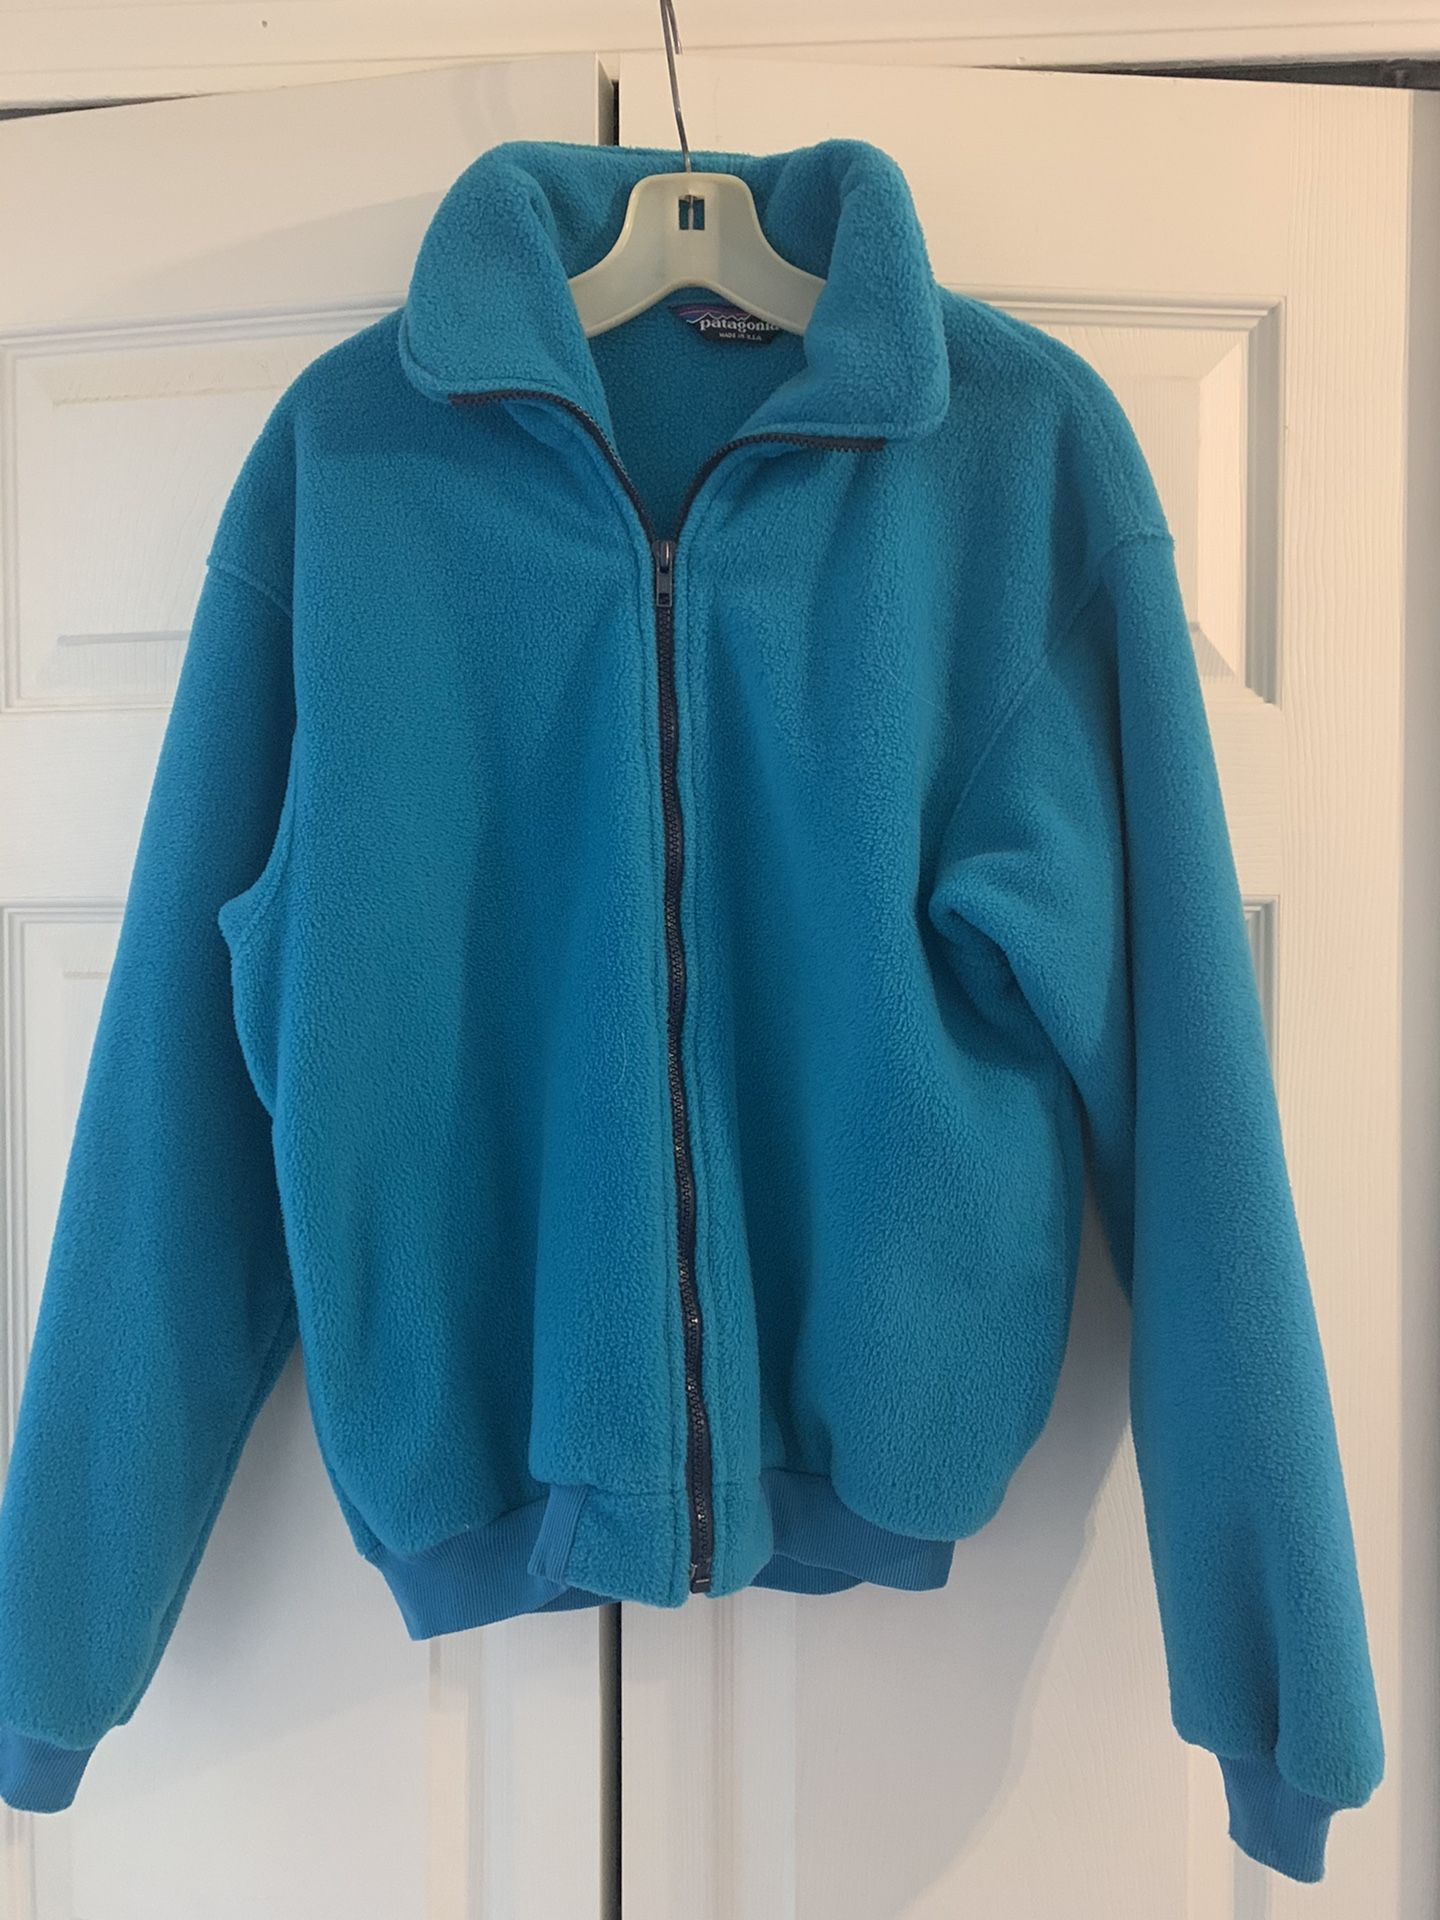 Patagonia turquoise blue fleece jacket